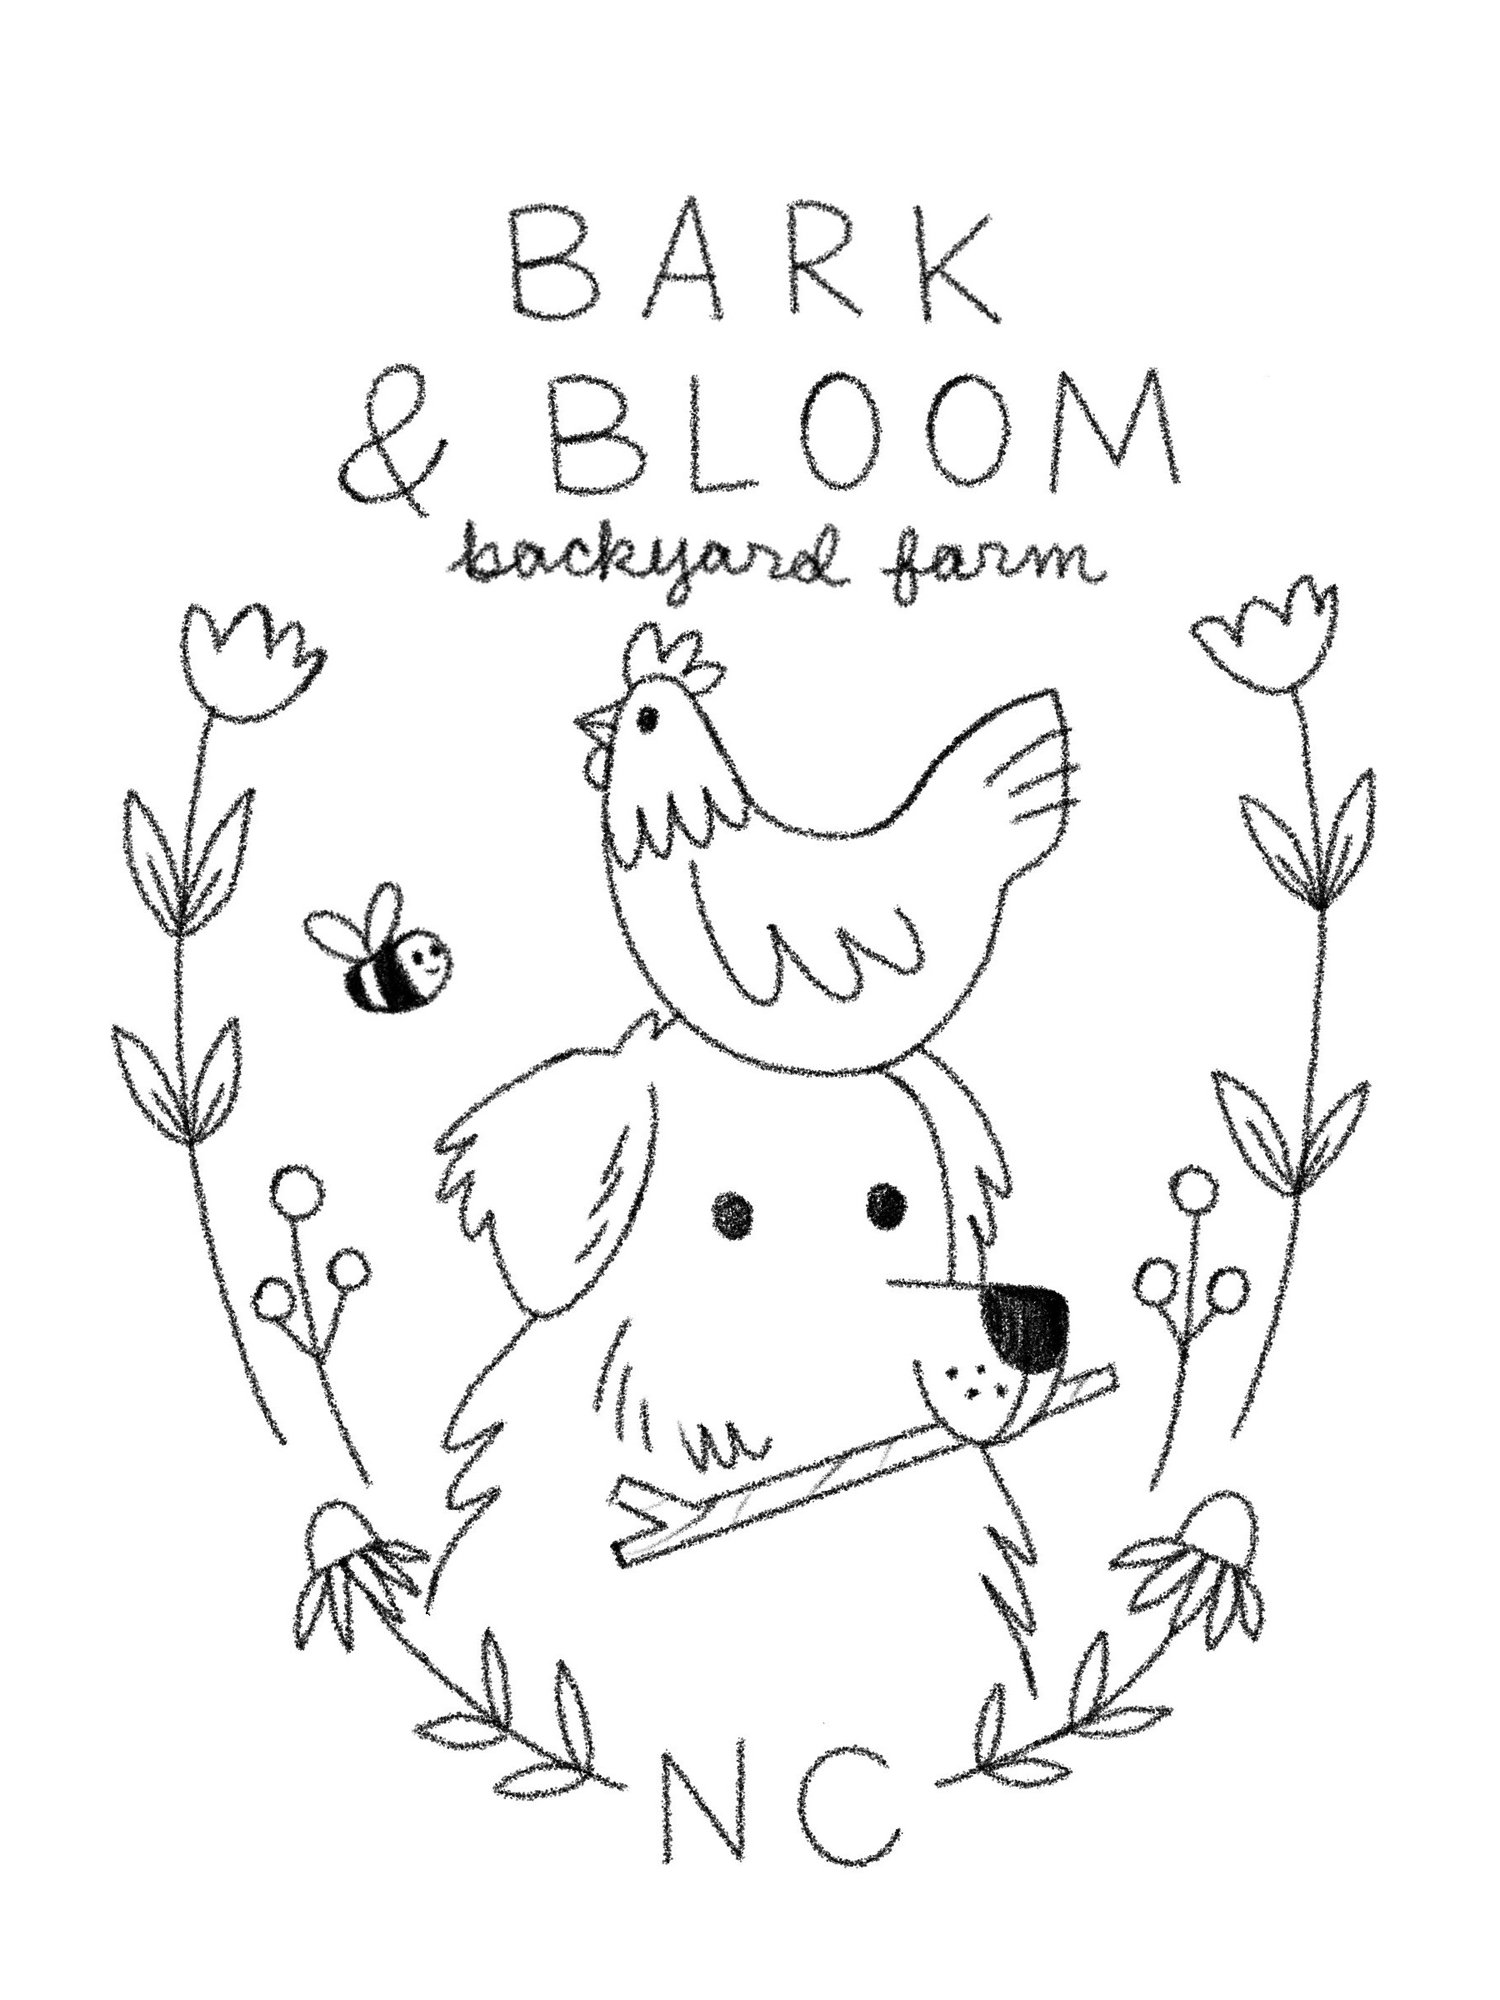 Bark and Bloom Backyard Farm